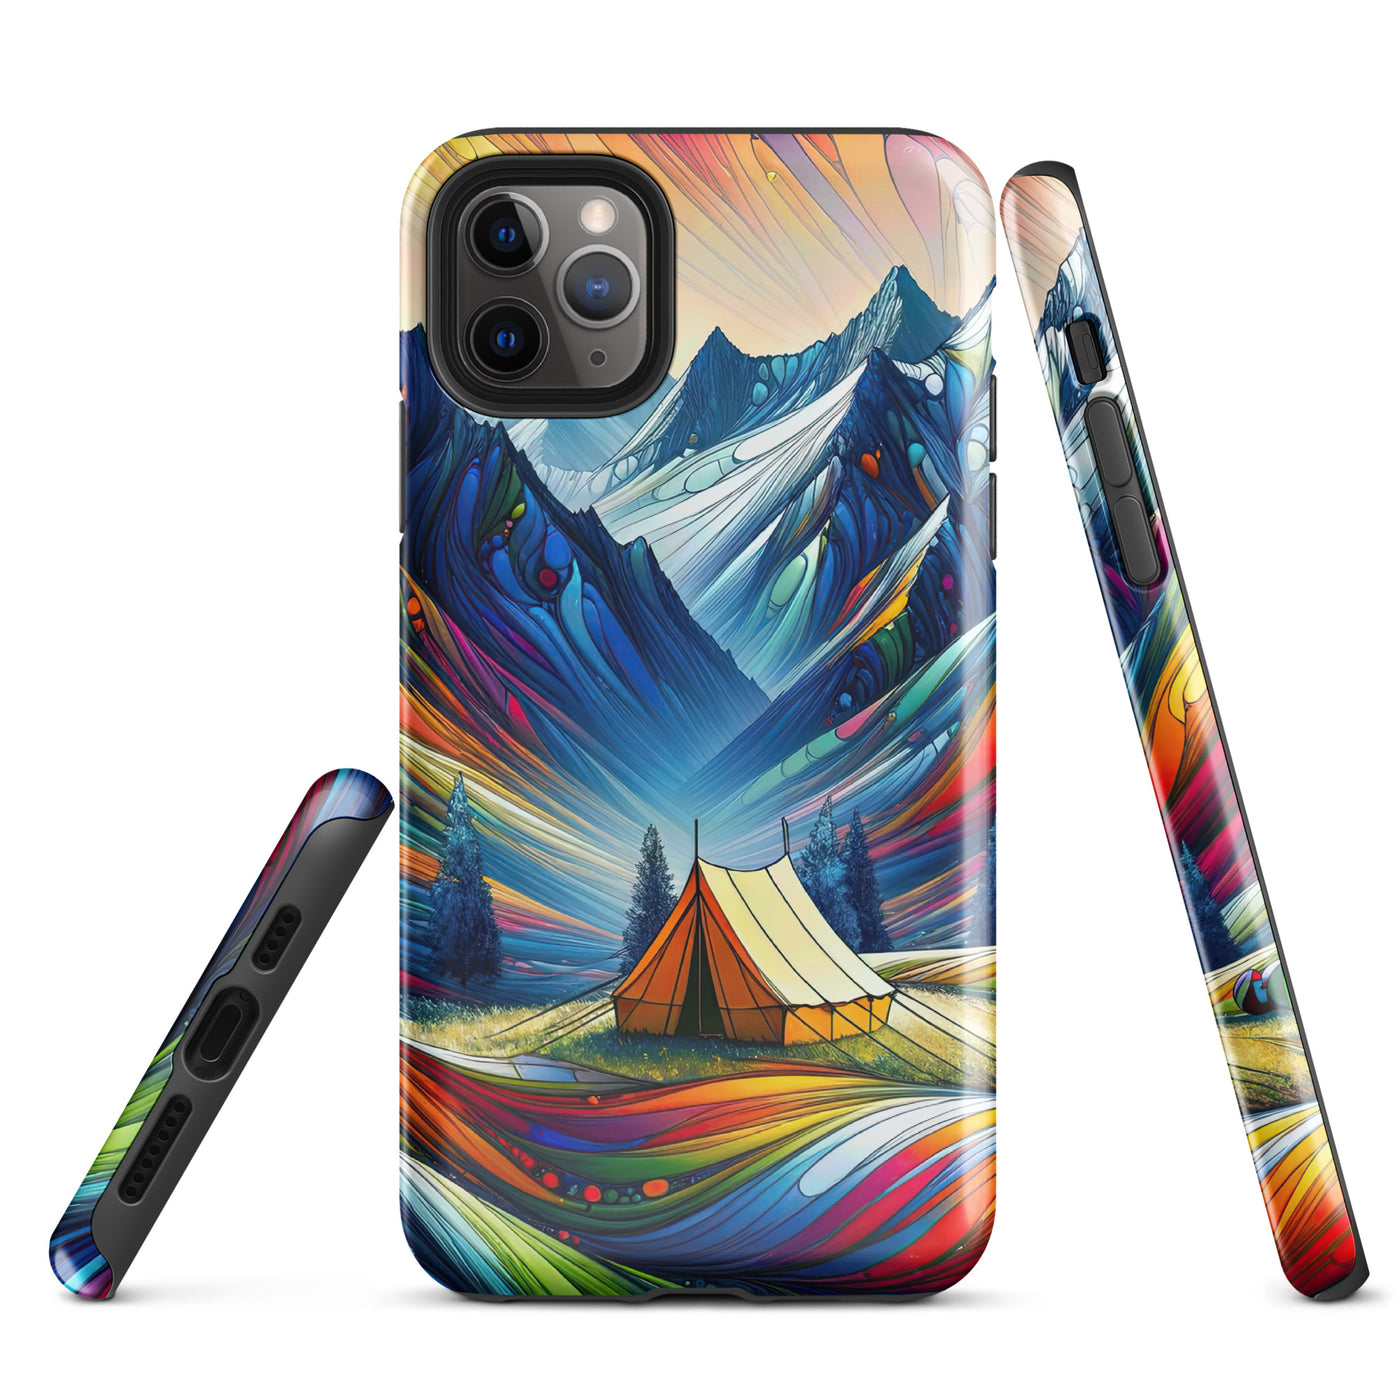 Surreale Alpen in abstrakten Farben, dynamische Formen der Landschaft - iPhone Schutzhülle (robust) camping xxx yyy zzz iPhone 11 Pro Max